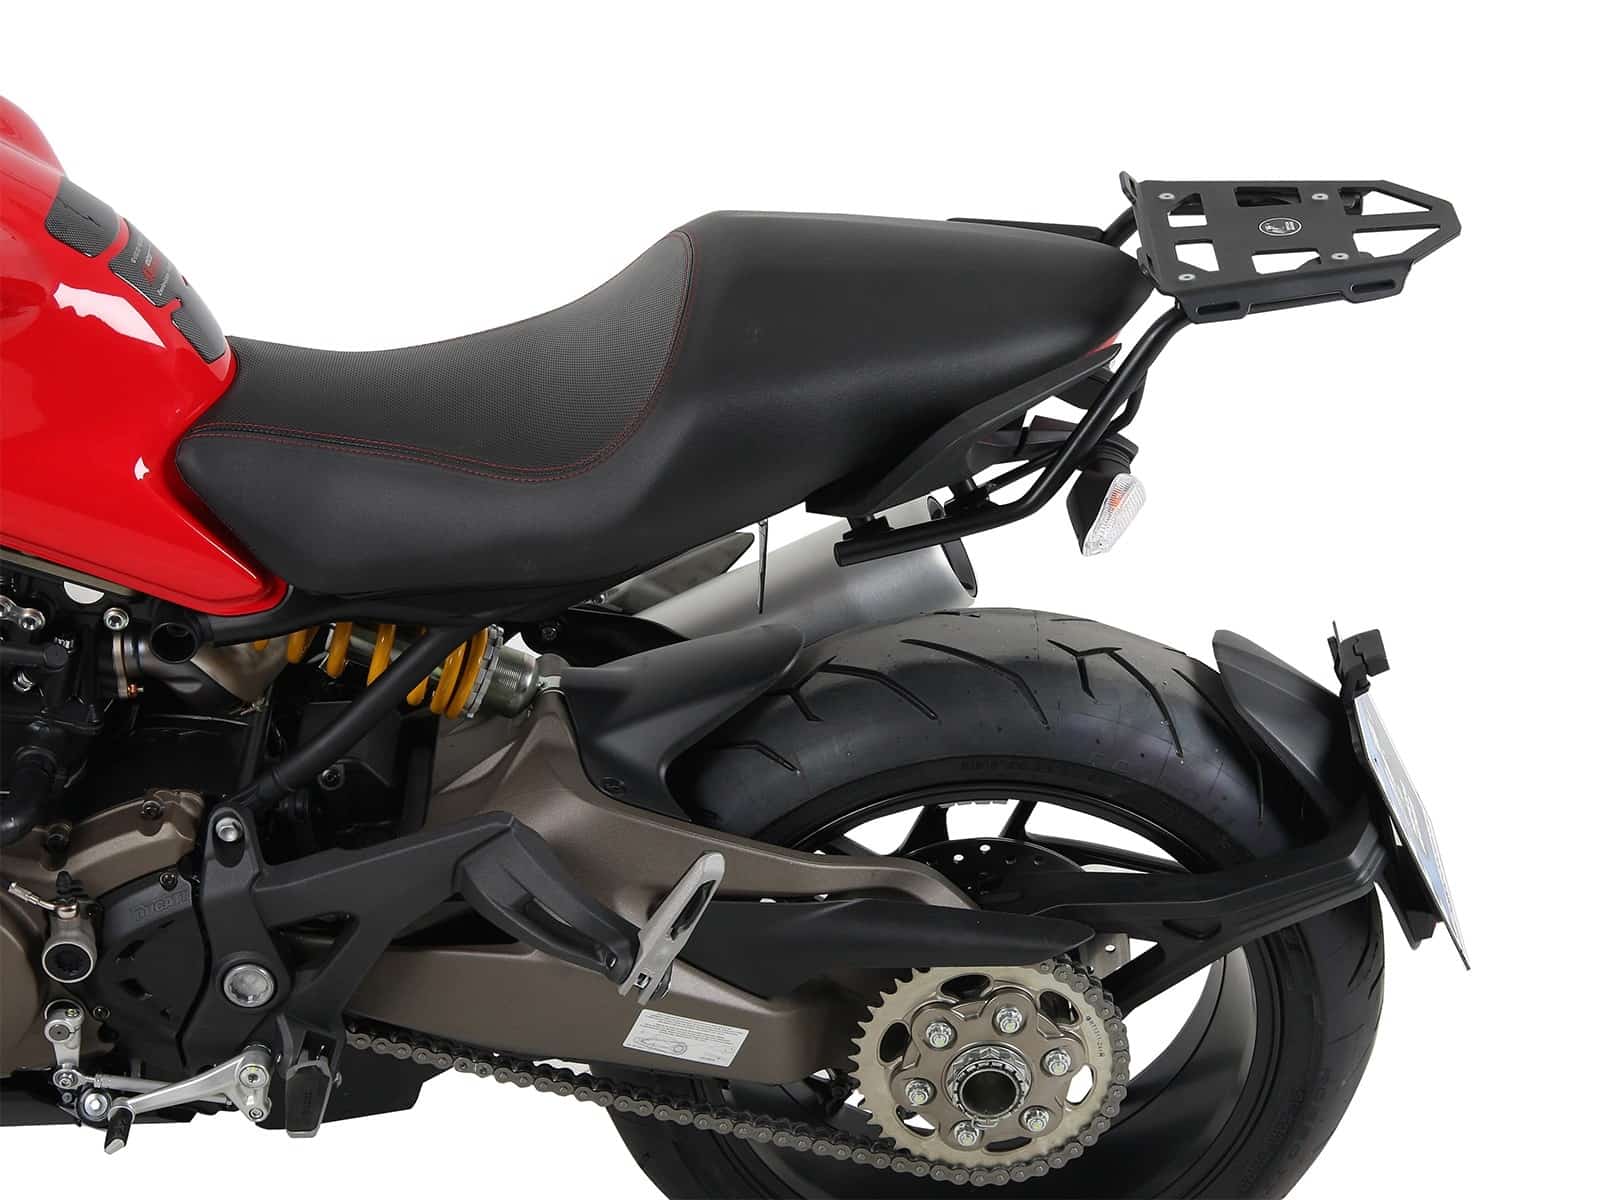 Minirack soft luggage rear rack for Ducati Monster 1200/S (2013-2016)